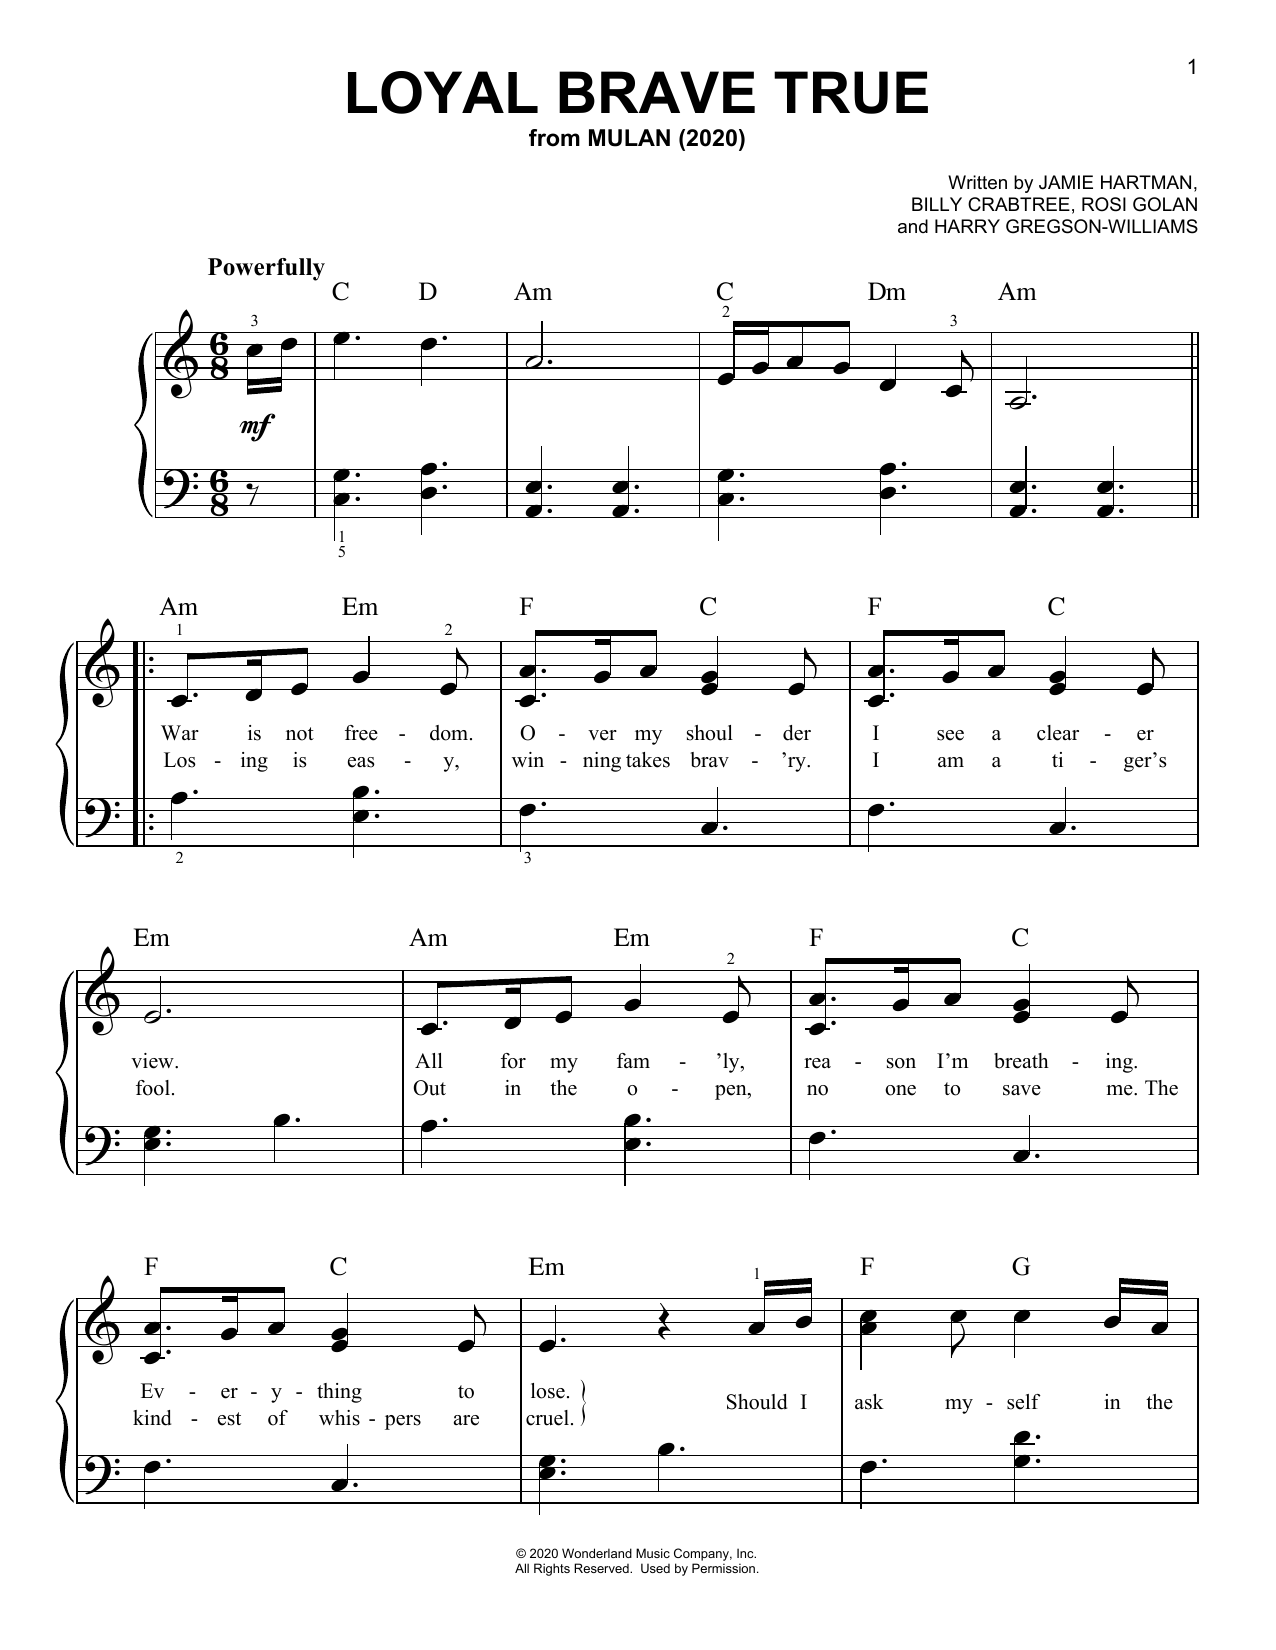 Christina Aguilera Loyal Brave True (from Mulan) Sheet Music Notes & Chords for Big Note Piano - Download or Print PDF